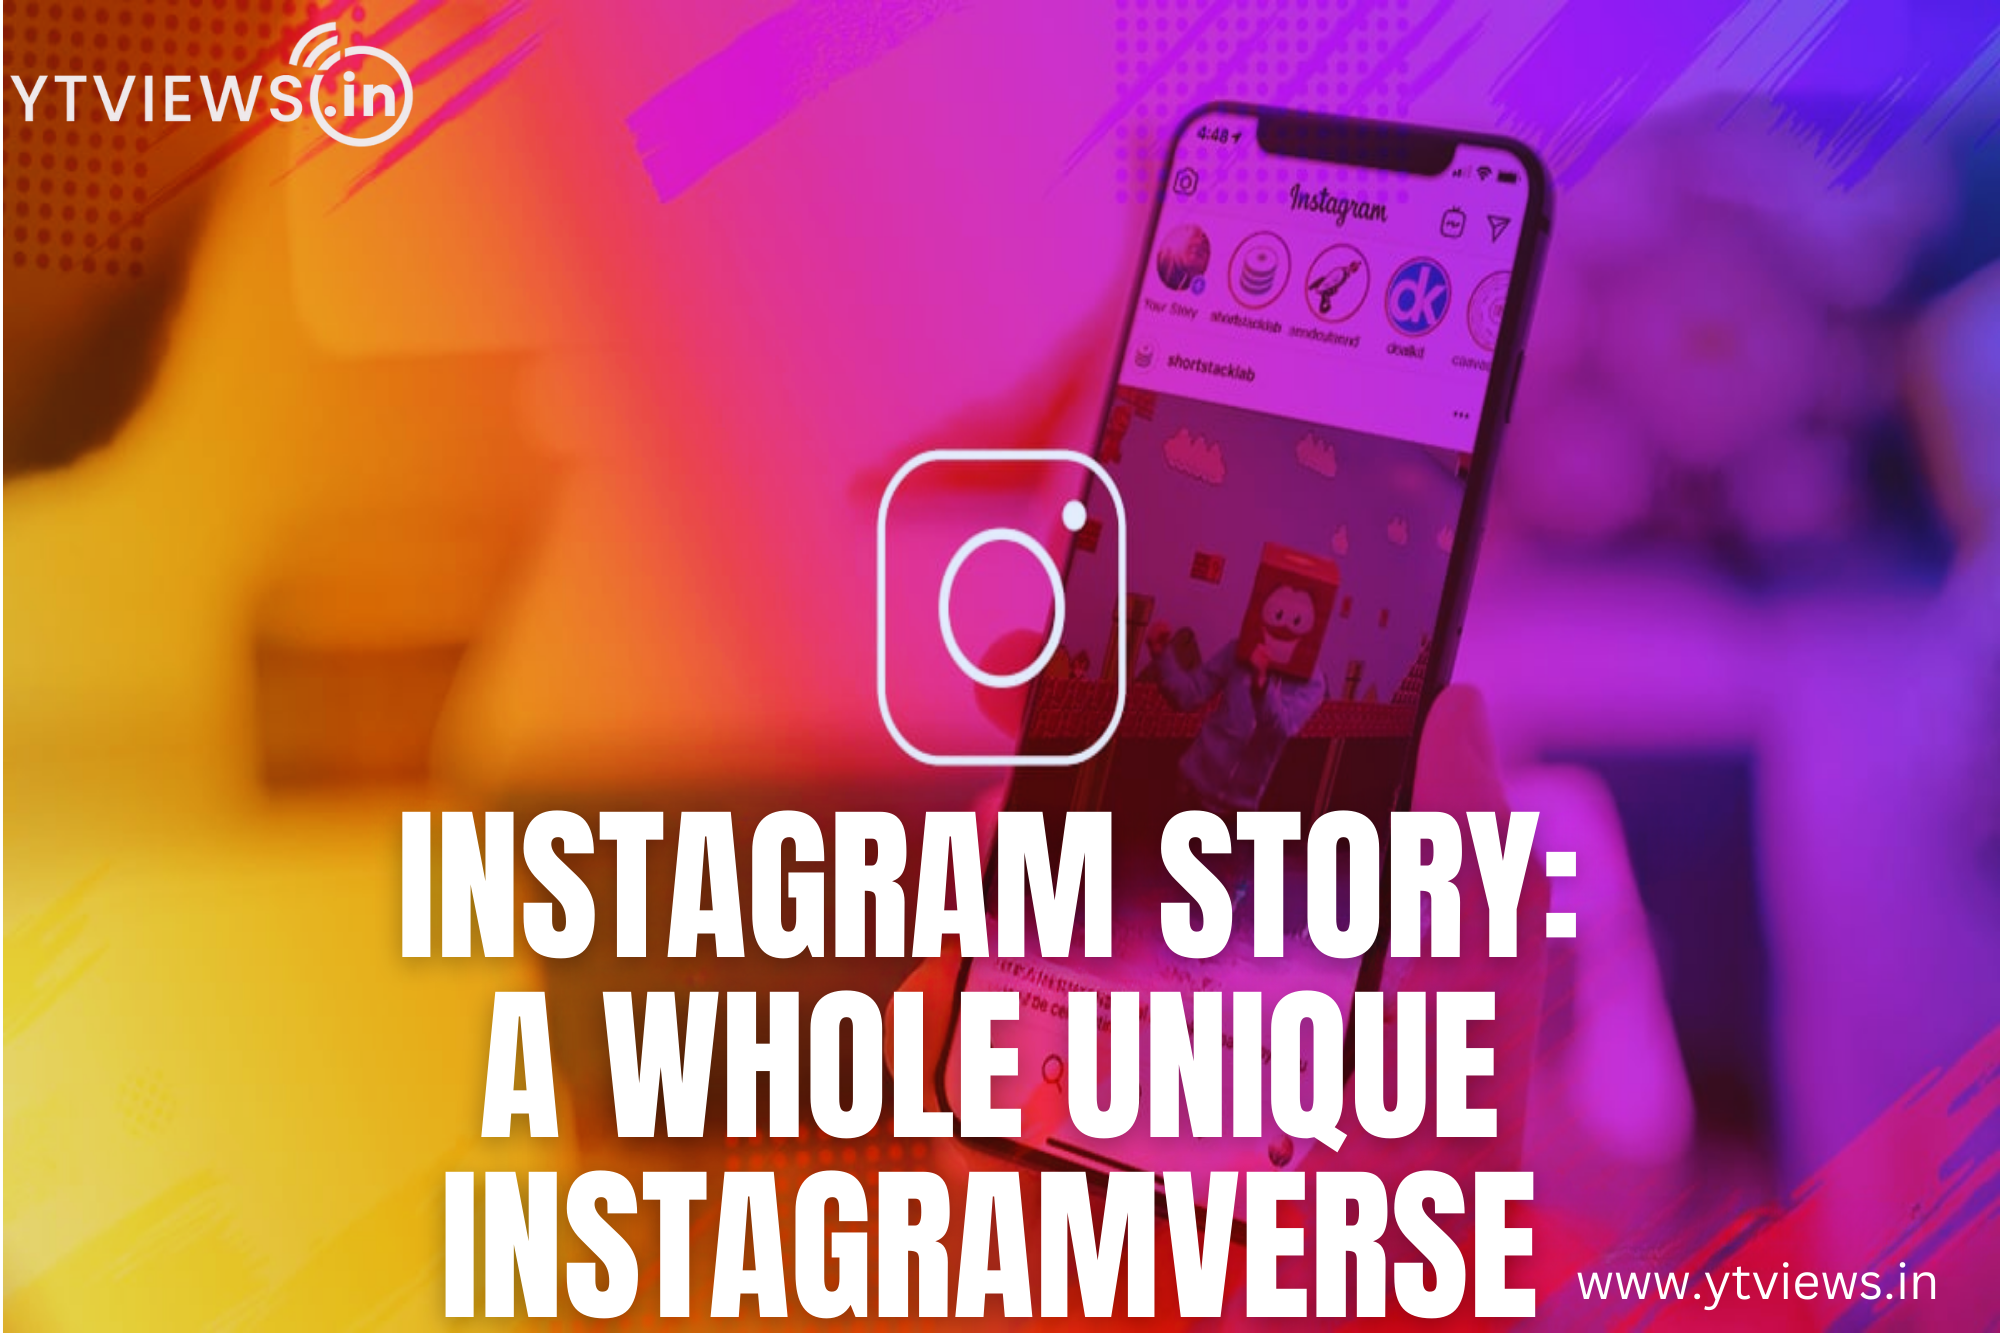 Instagram story- A whole unique Instagramverse